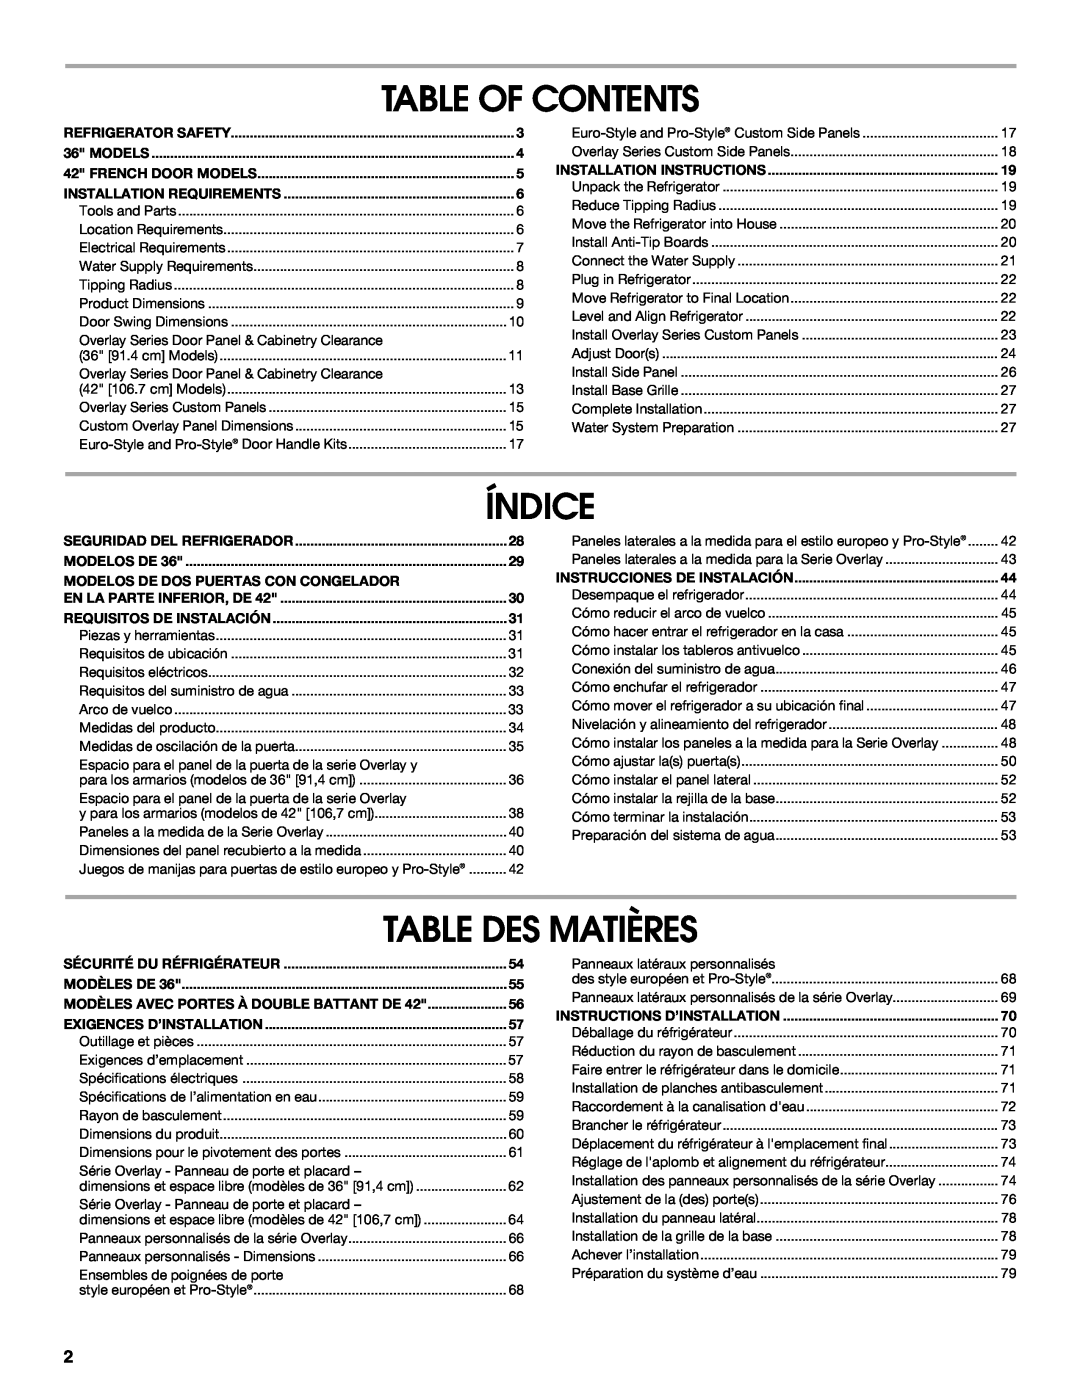 Jenn-Air W10183782A manual Table Of Contents, Índice, Table Des Matières, Modelos De Dos Puertas Con Congelador 